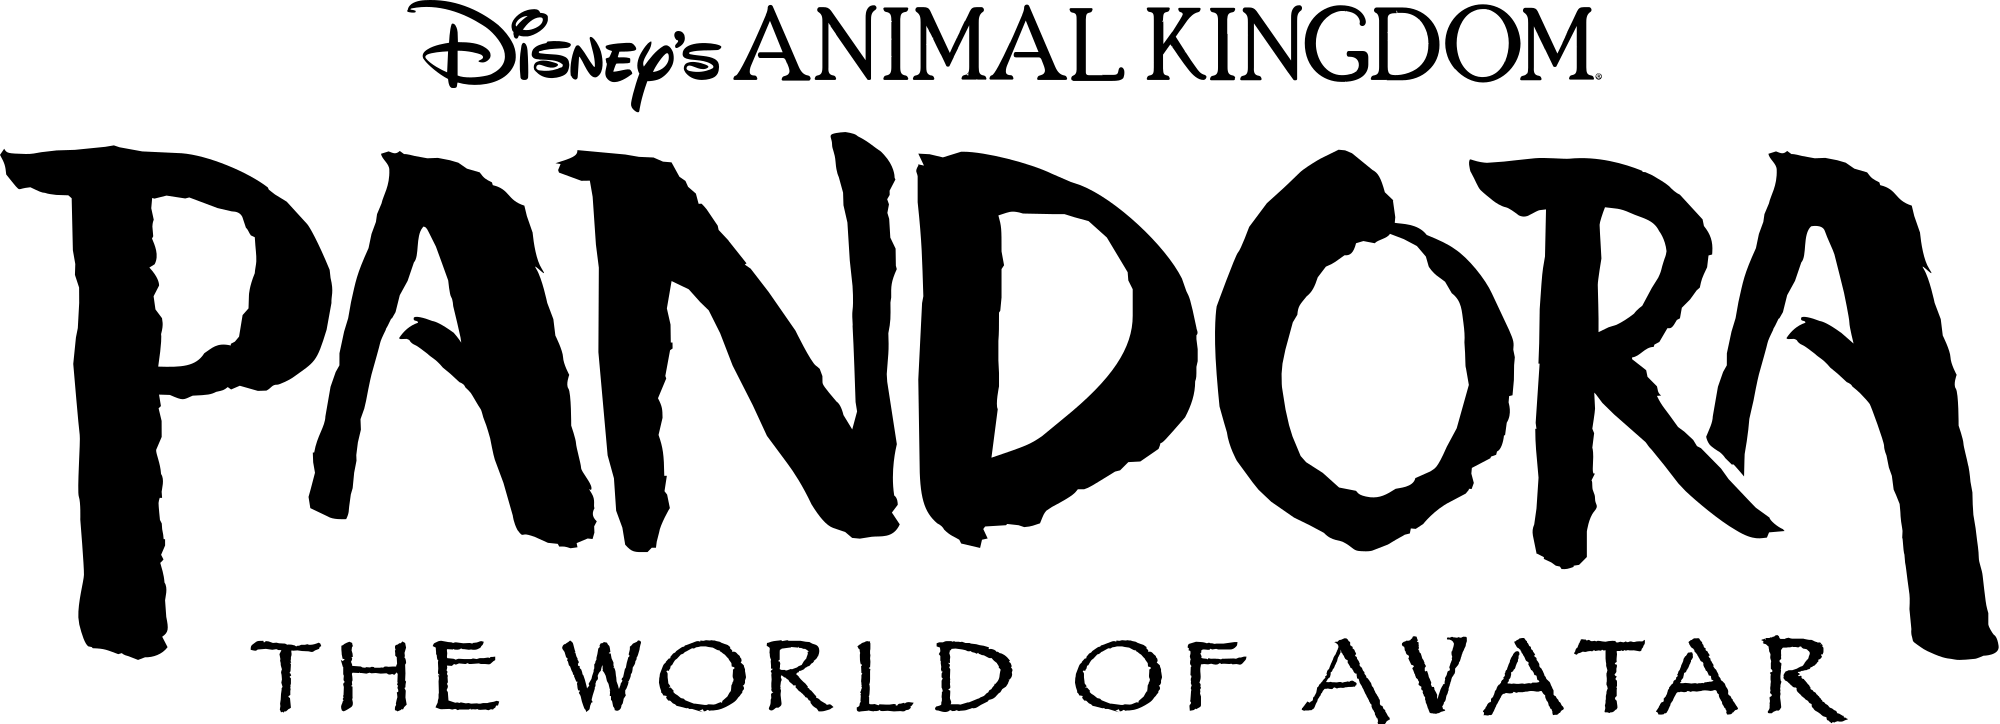 Black Disney Logo - File:Pandora logo black with Disney's Animal Kingdom.svg - Wikimedia ...